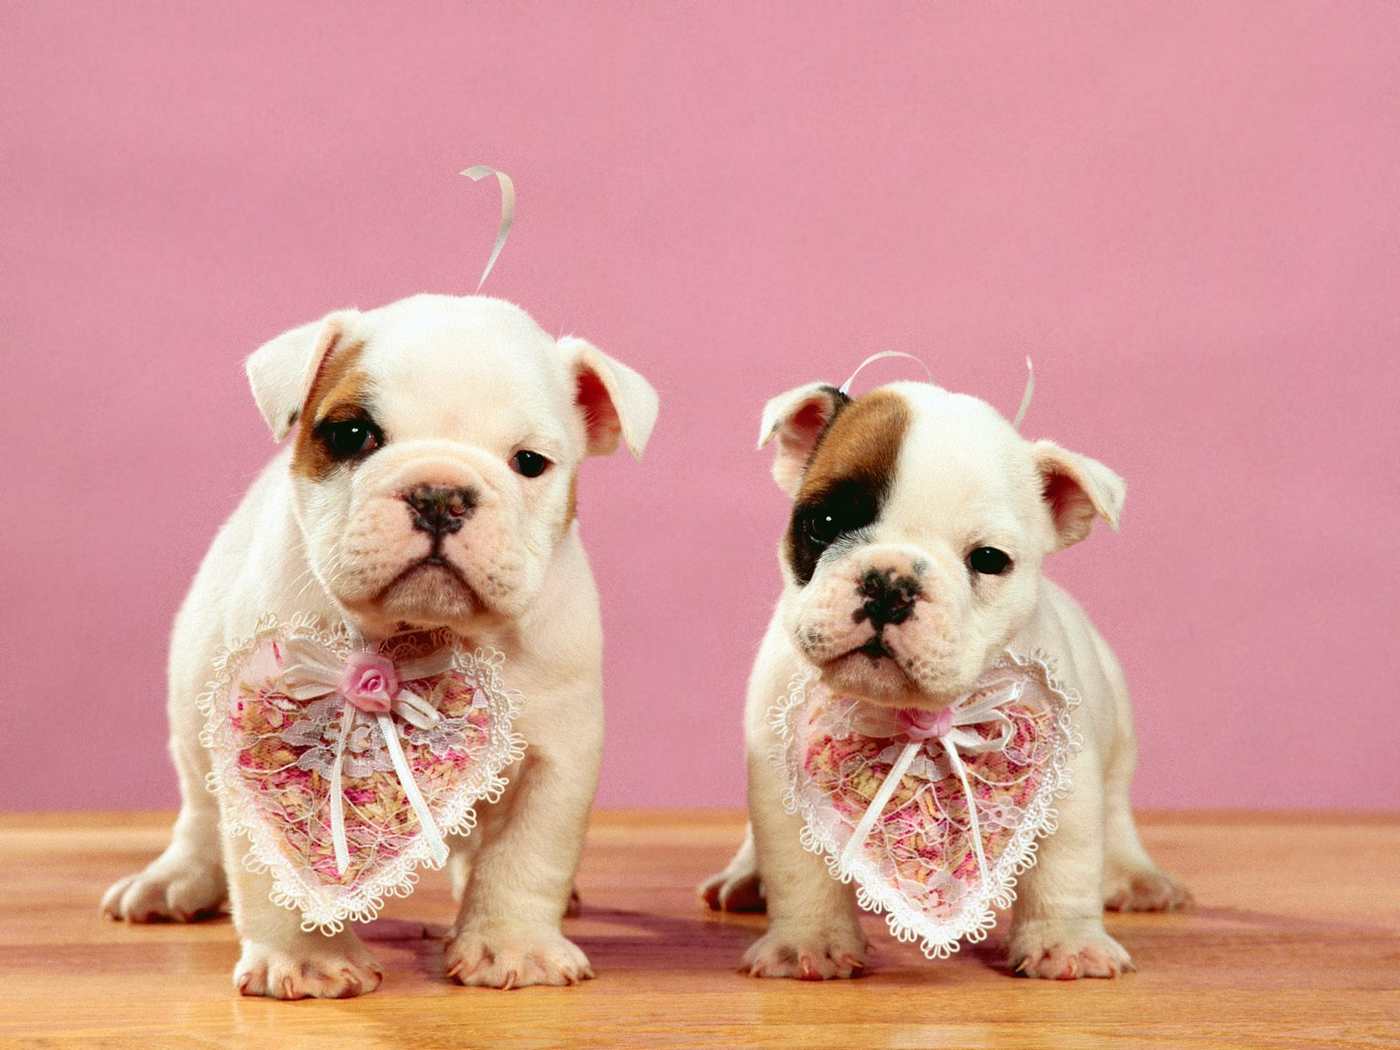 Puppy Valentines Day Pics